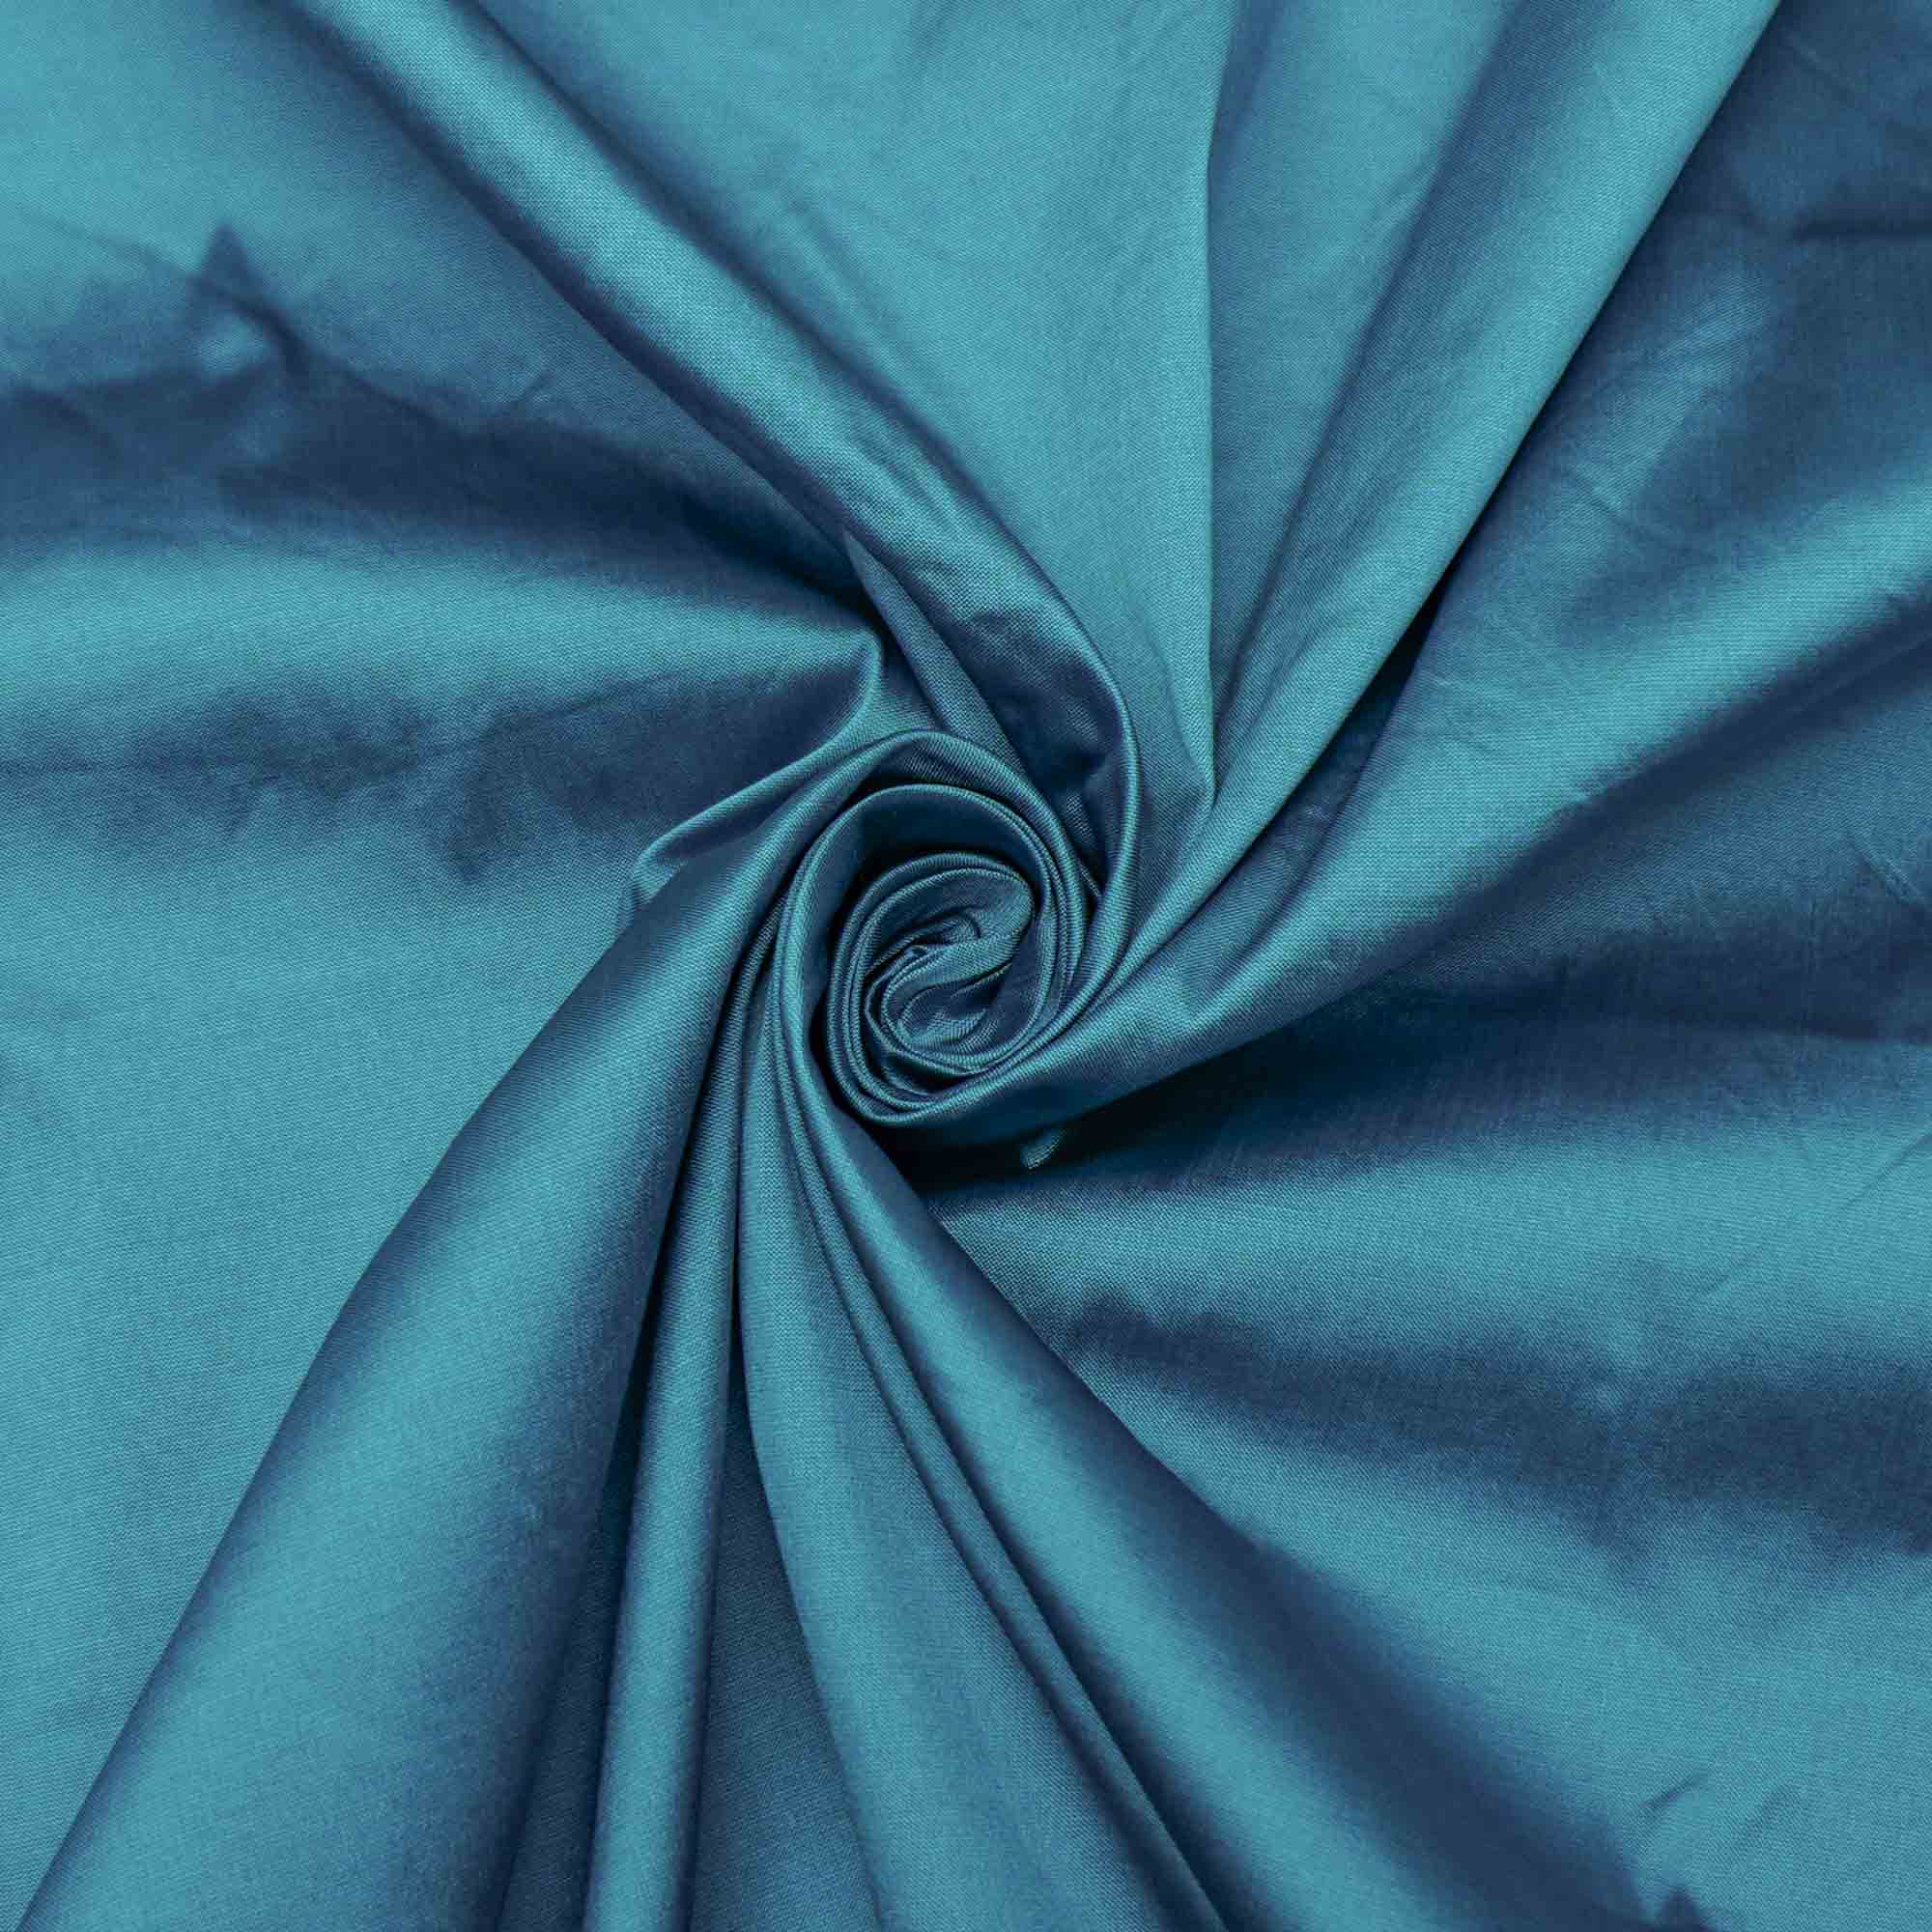 Tecido tafetá indiano azul turquesa